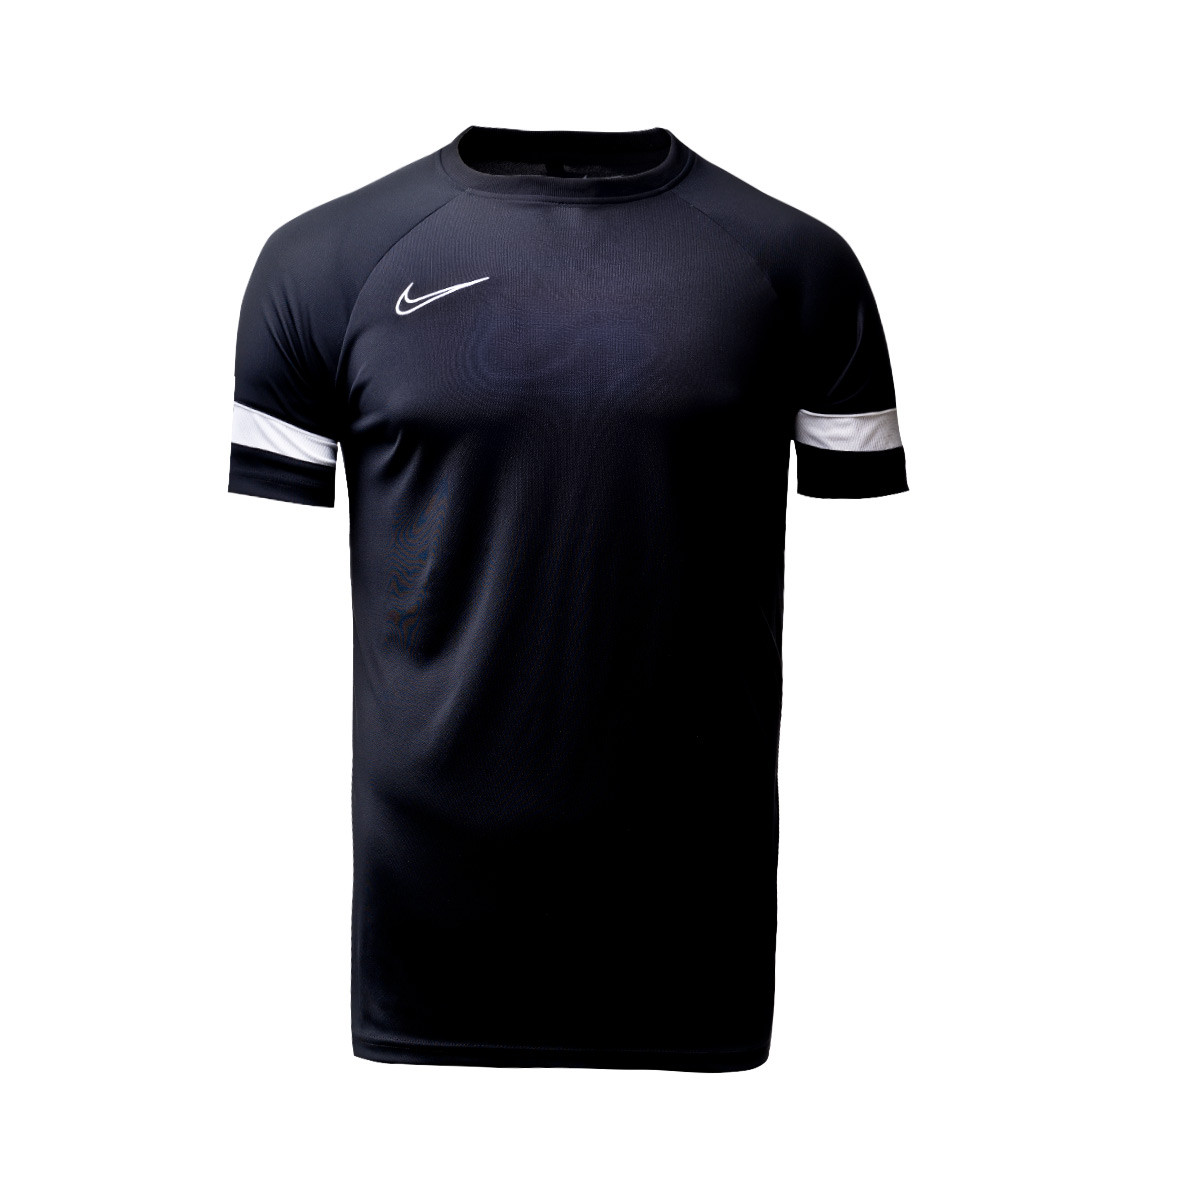 Camiseta Nike Academy 21 Training m/c Black-White - Fútbol